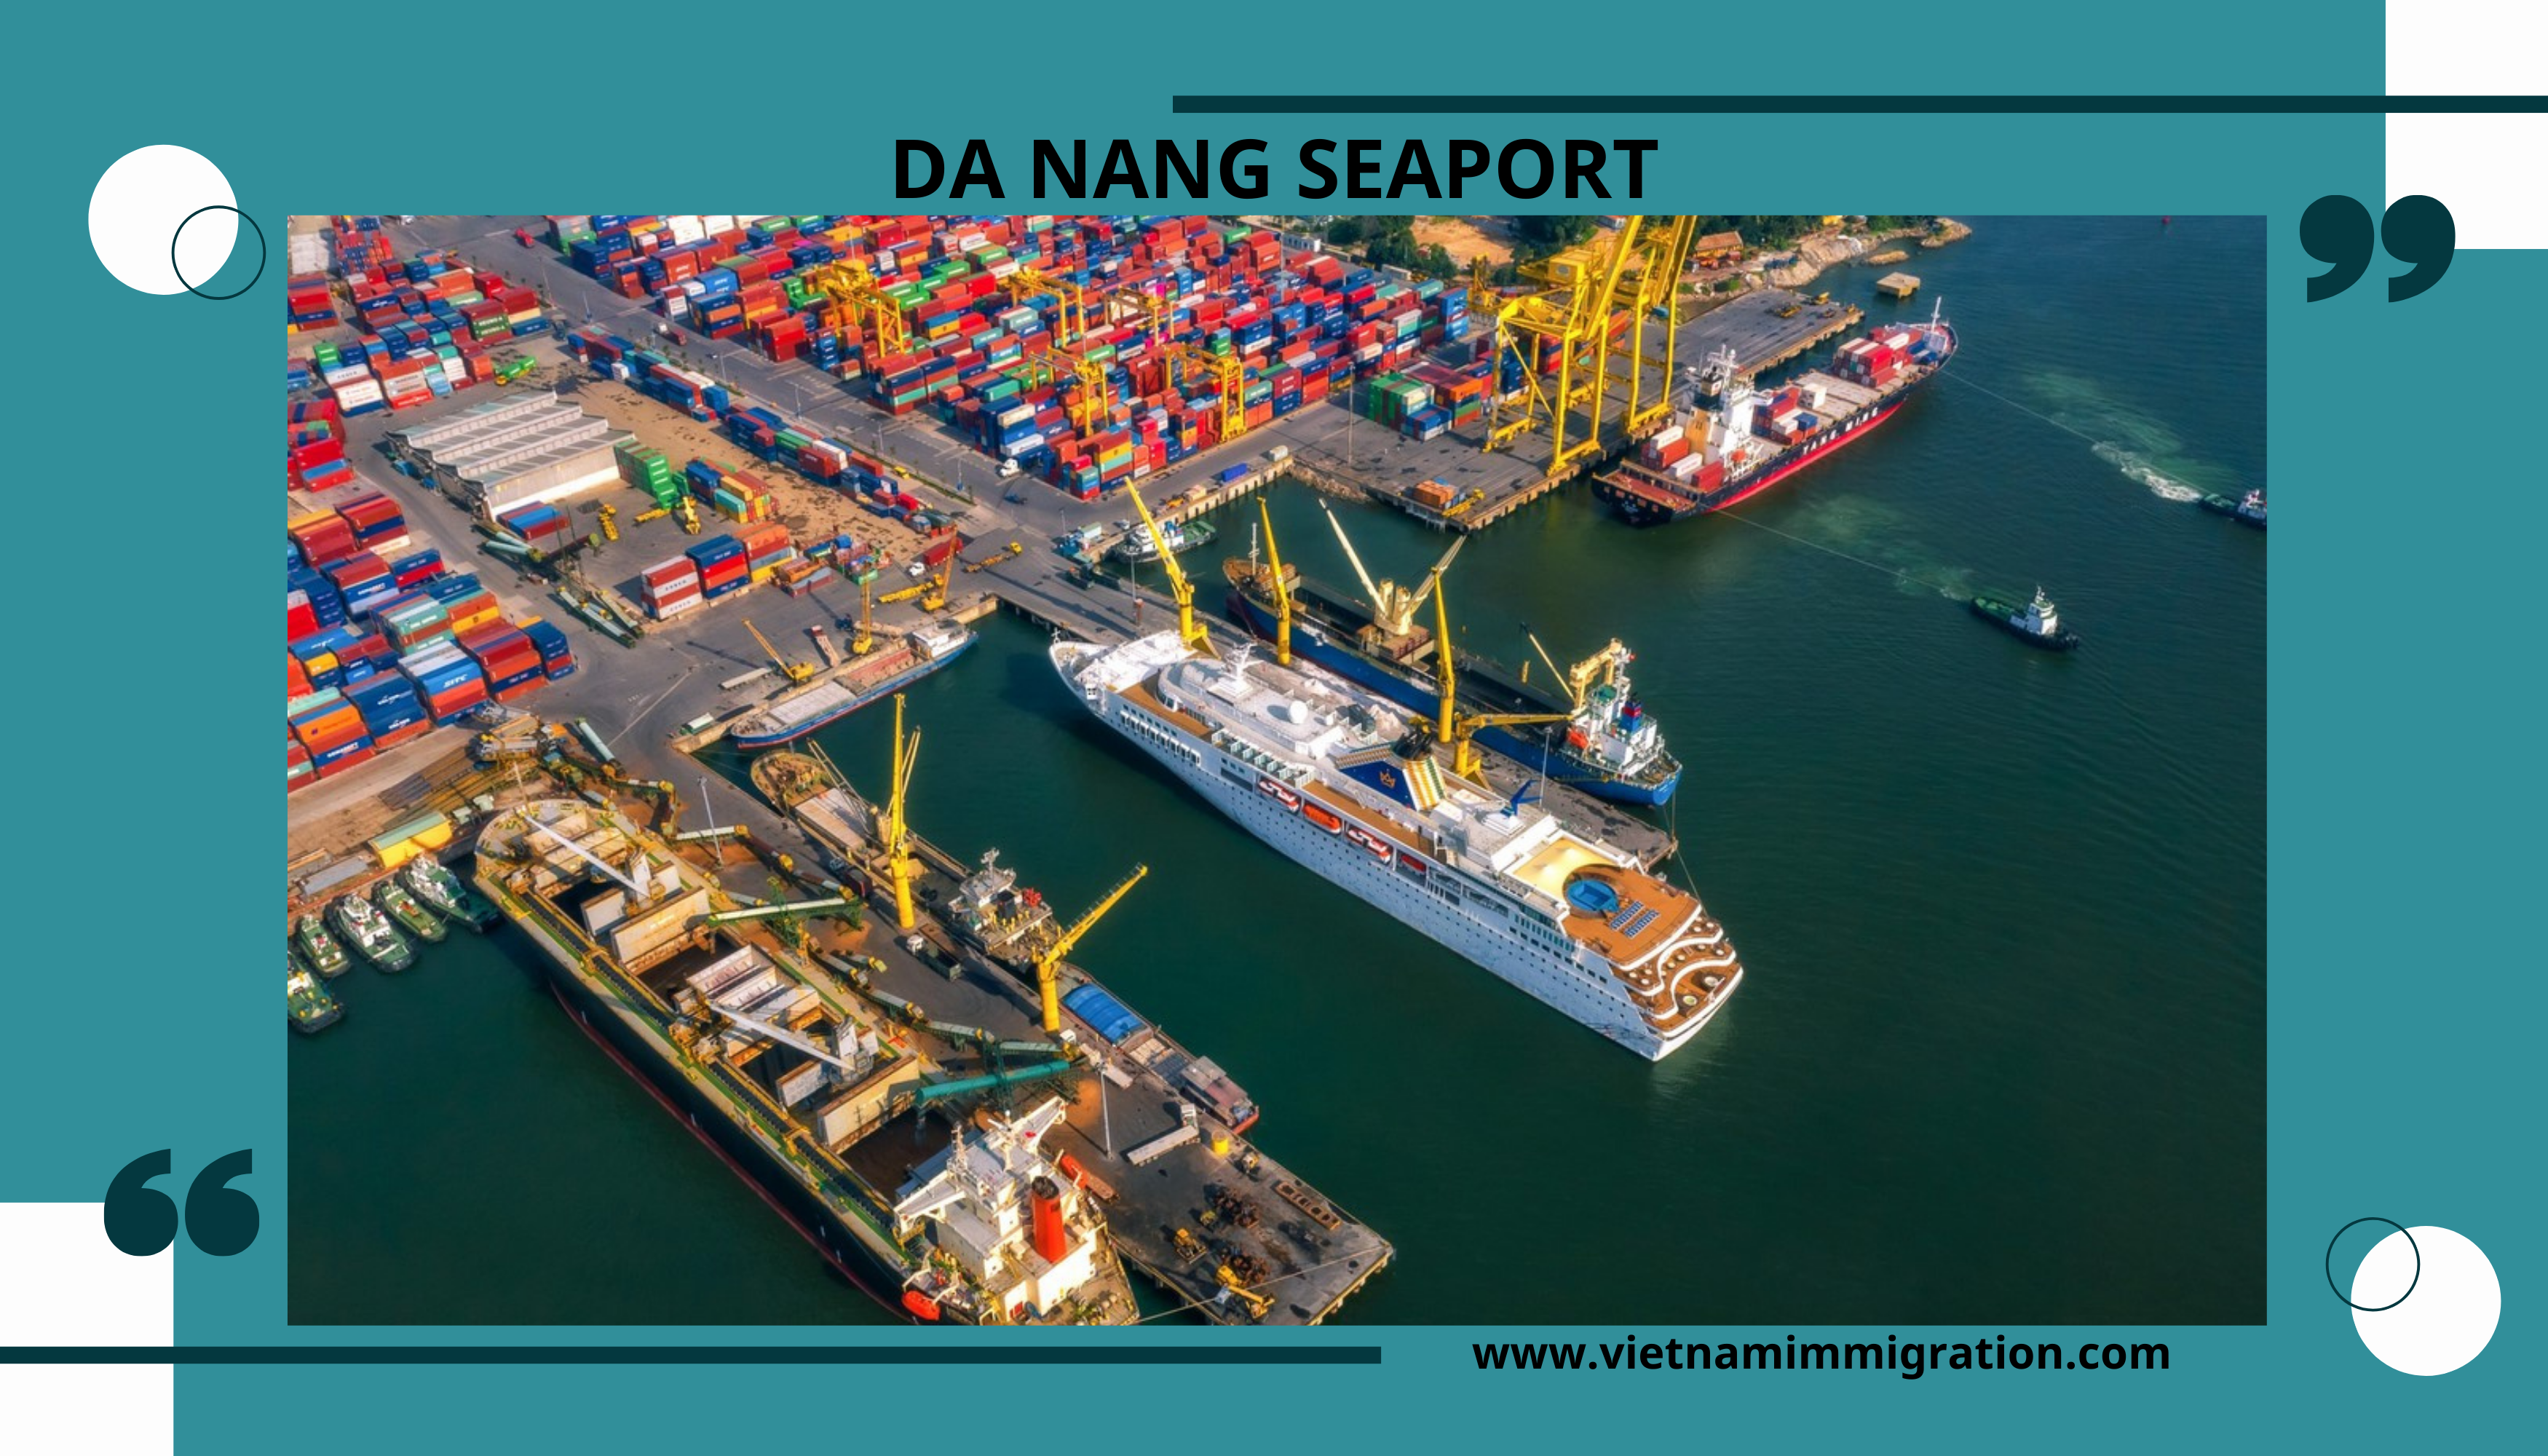 How to Get Vietnam E-Visa for Cruise Ships to Enter Da Nang Seaport in 2024